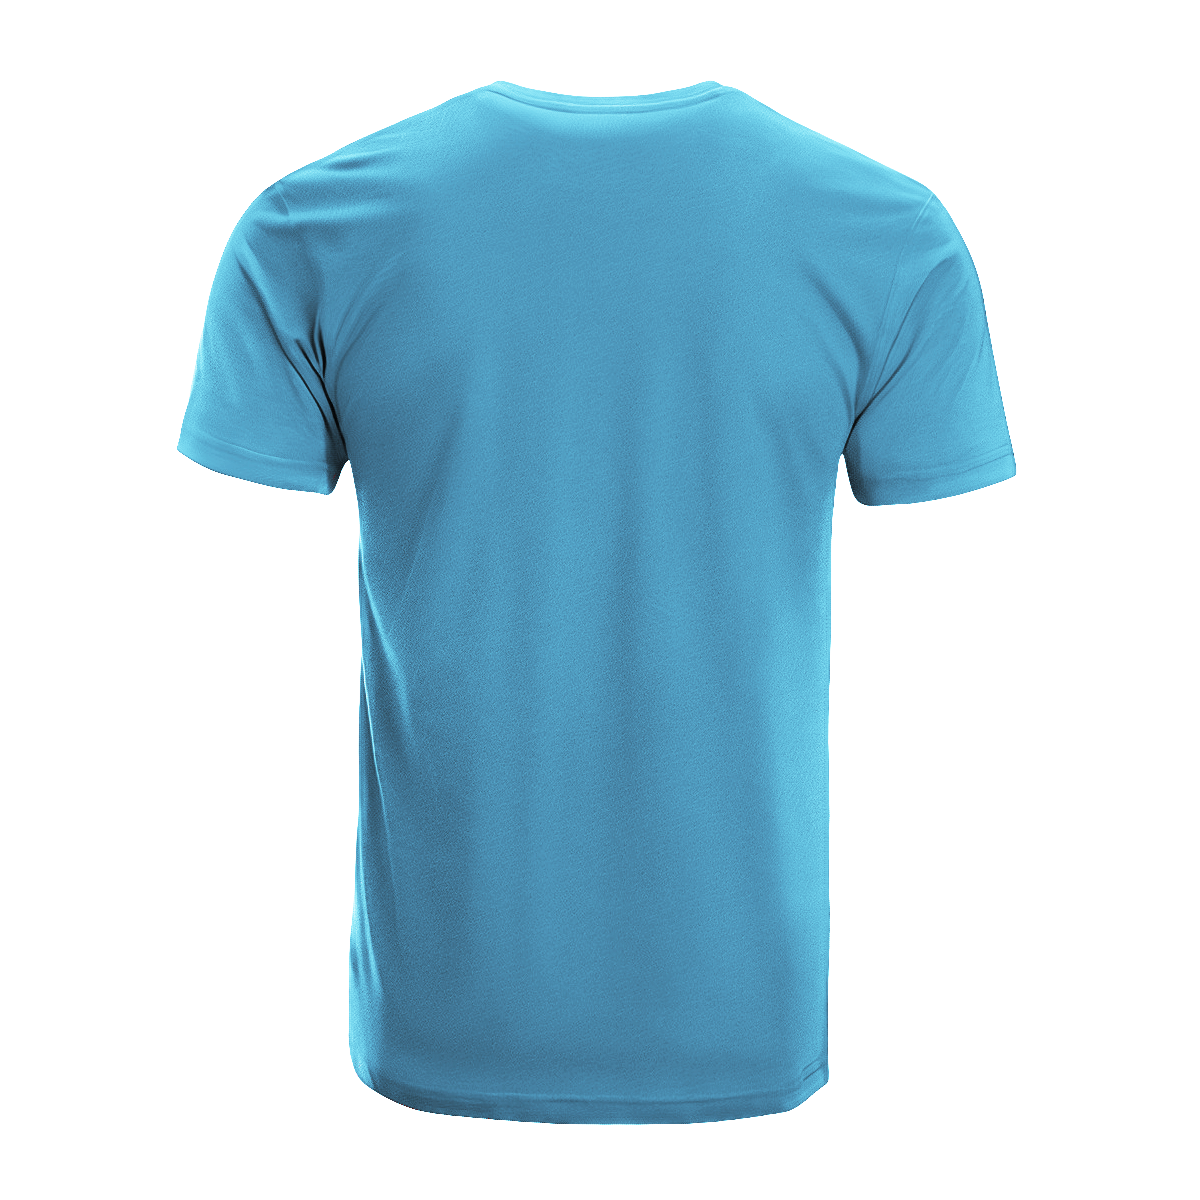 Clephan Tartan Crest T-shirt - I'm not yelling style